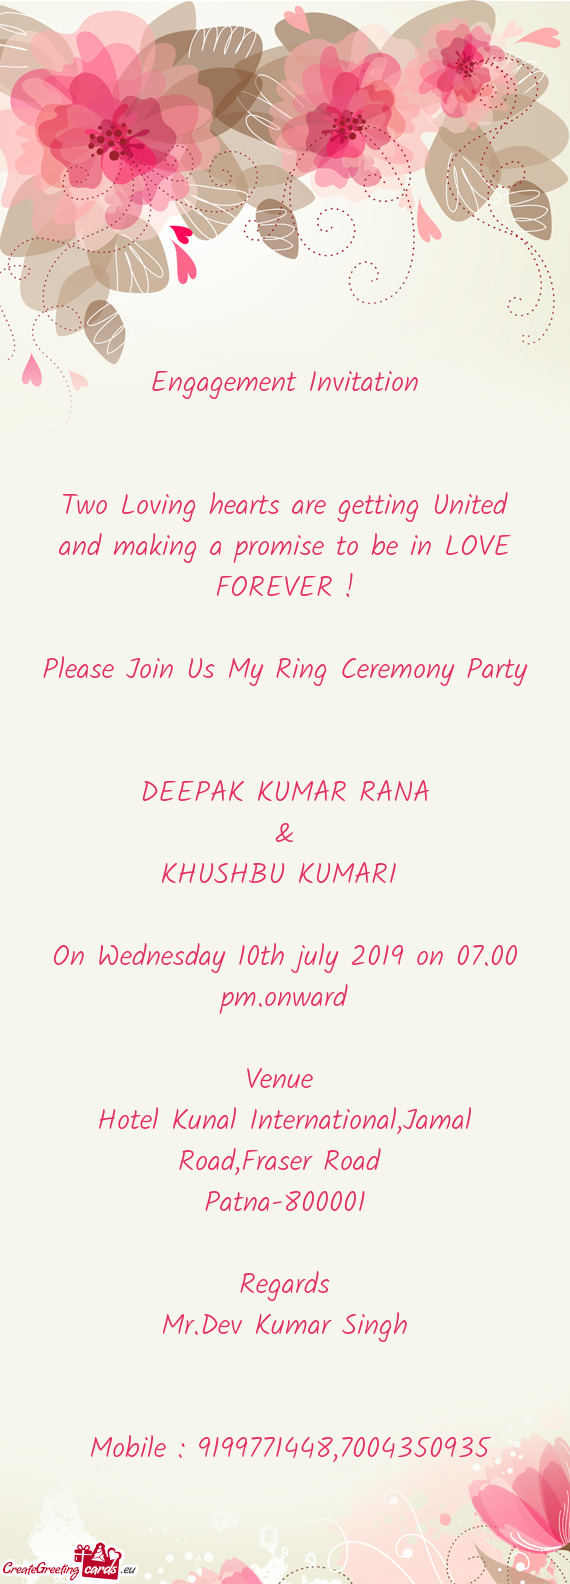 FOREVER !
 
 Please Join Us My Ring Ceremony Party
 
 
 DEEPAK KUMAR RANA
 &
 KHUSHBU KUMARI 
 
 On